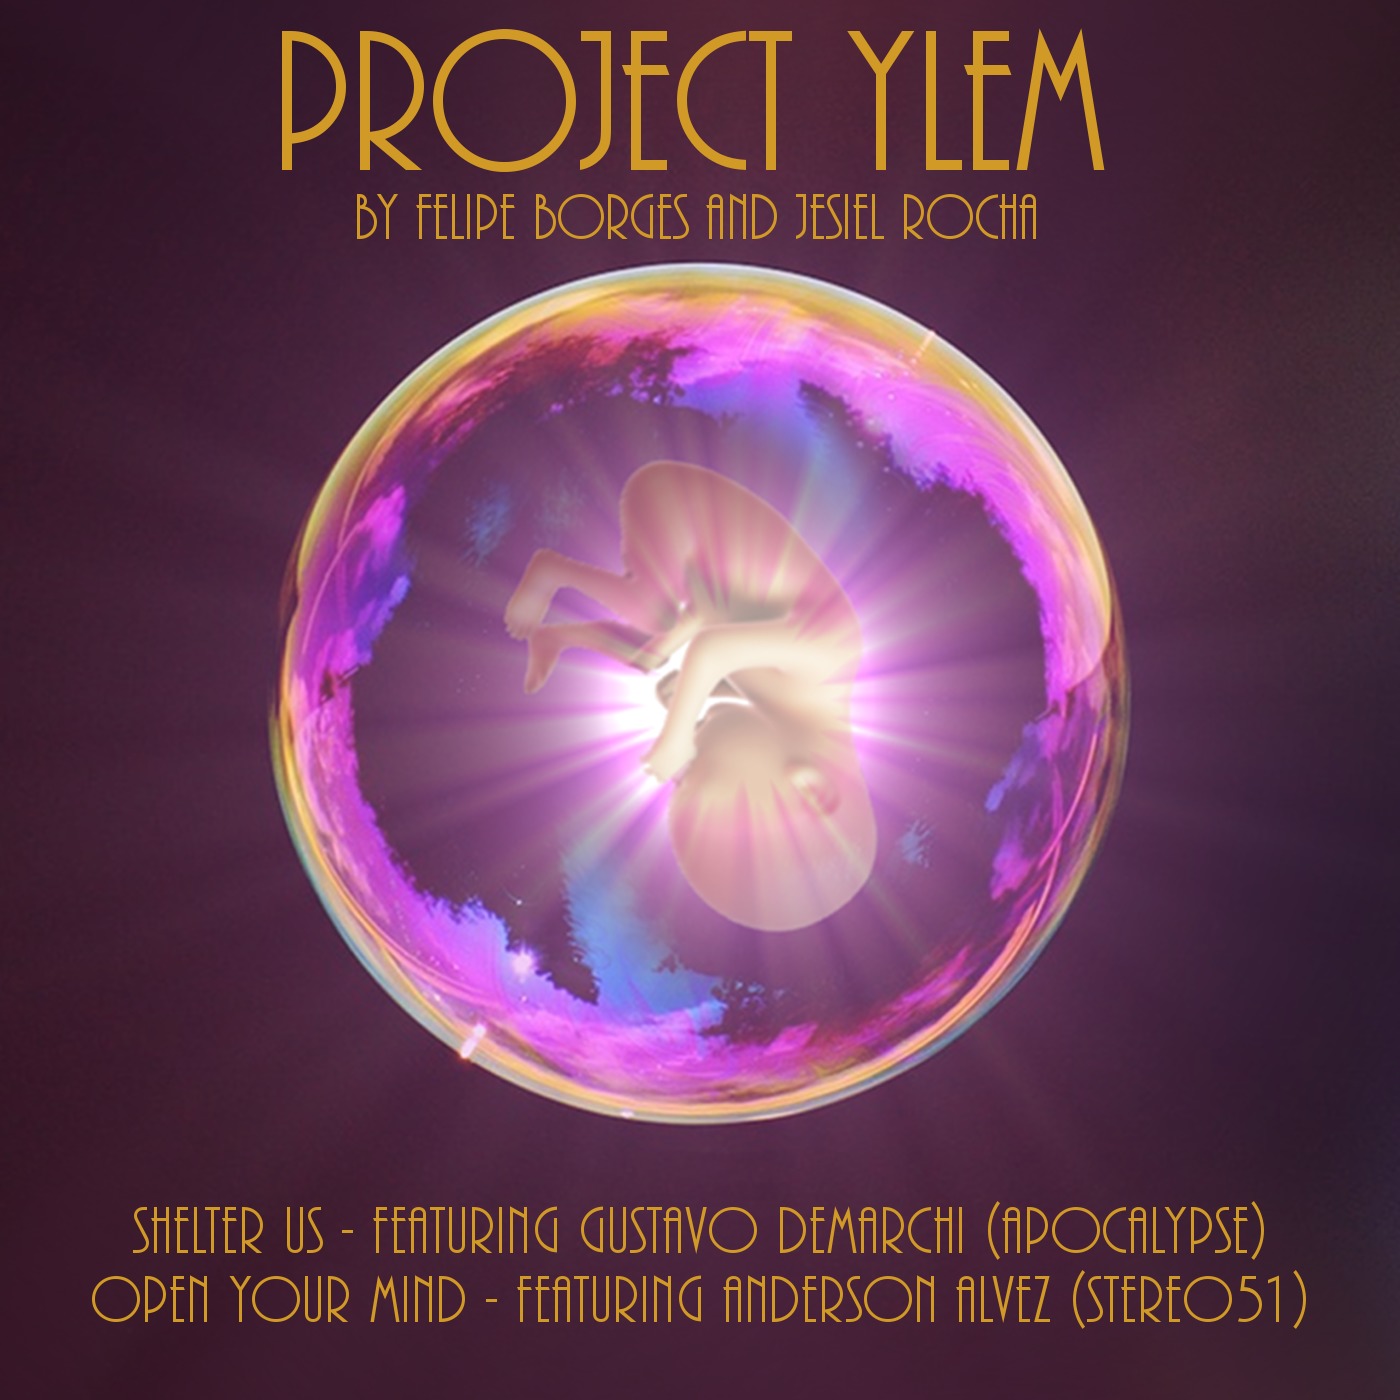 Project Ylem